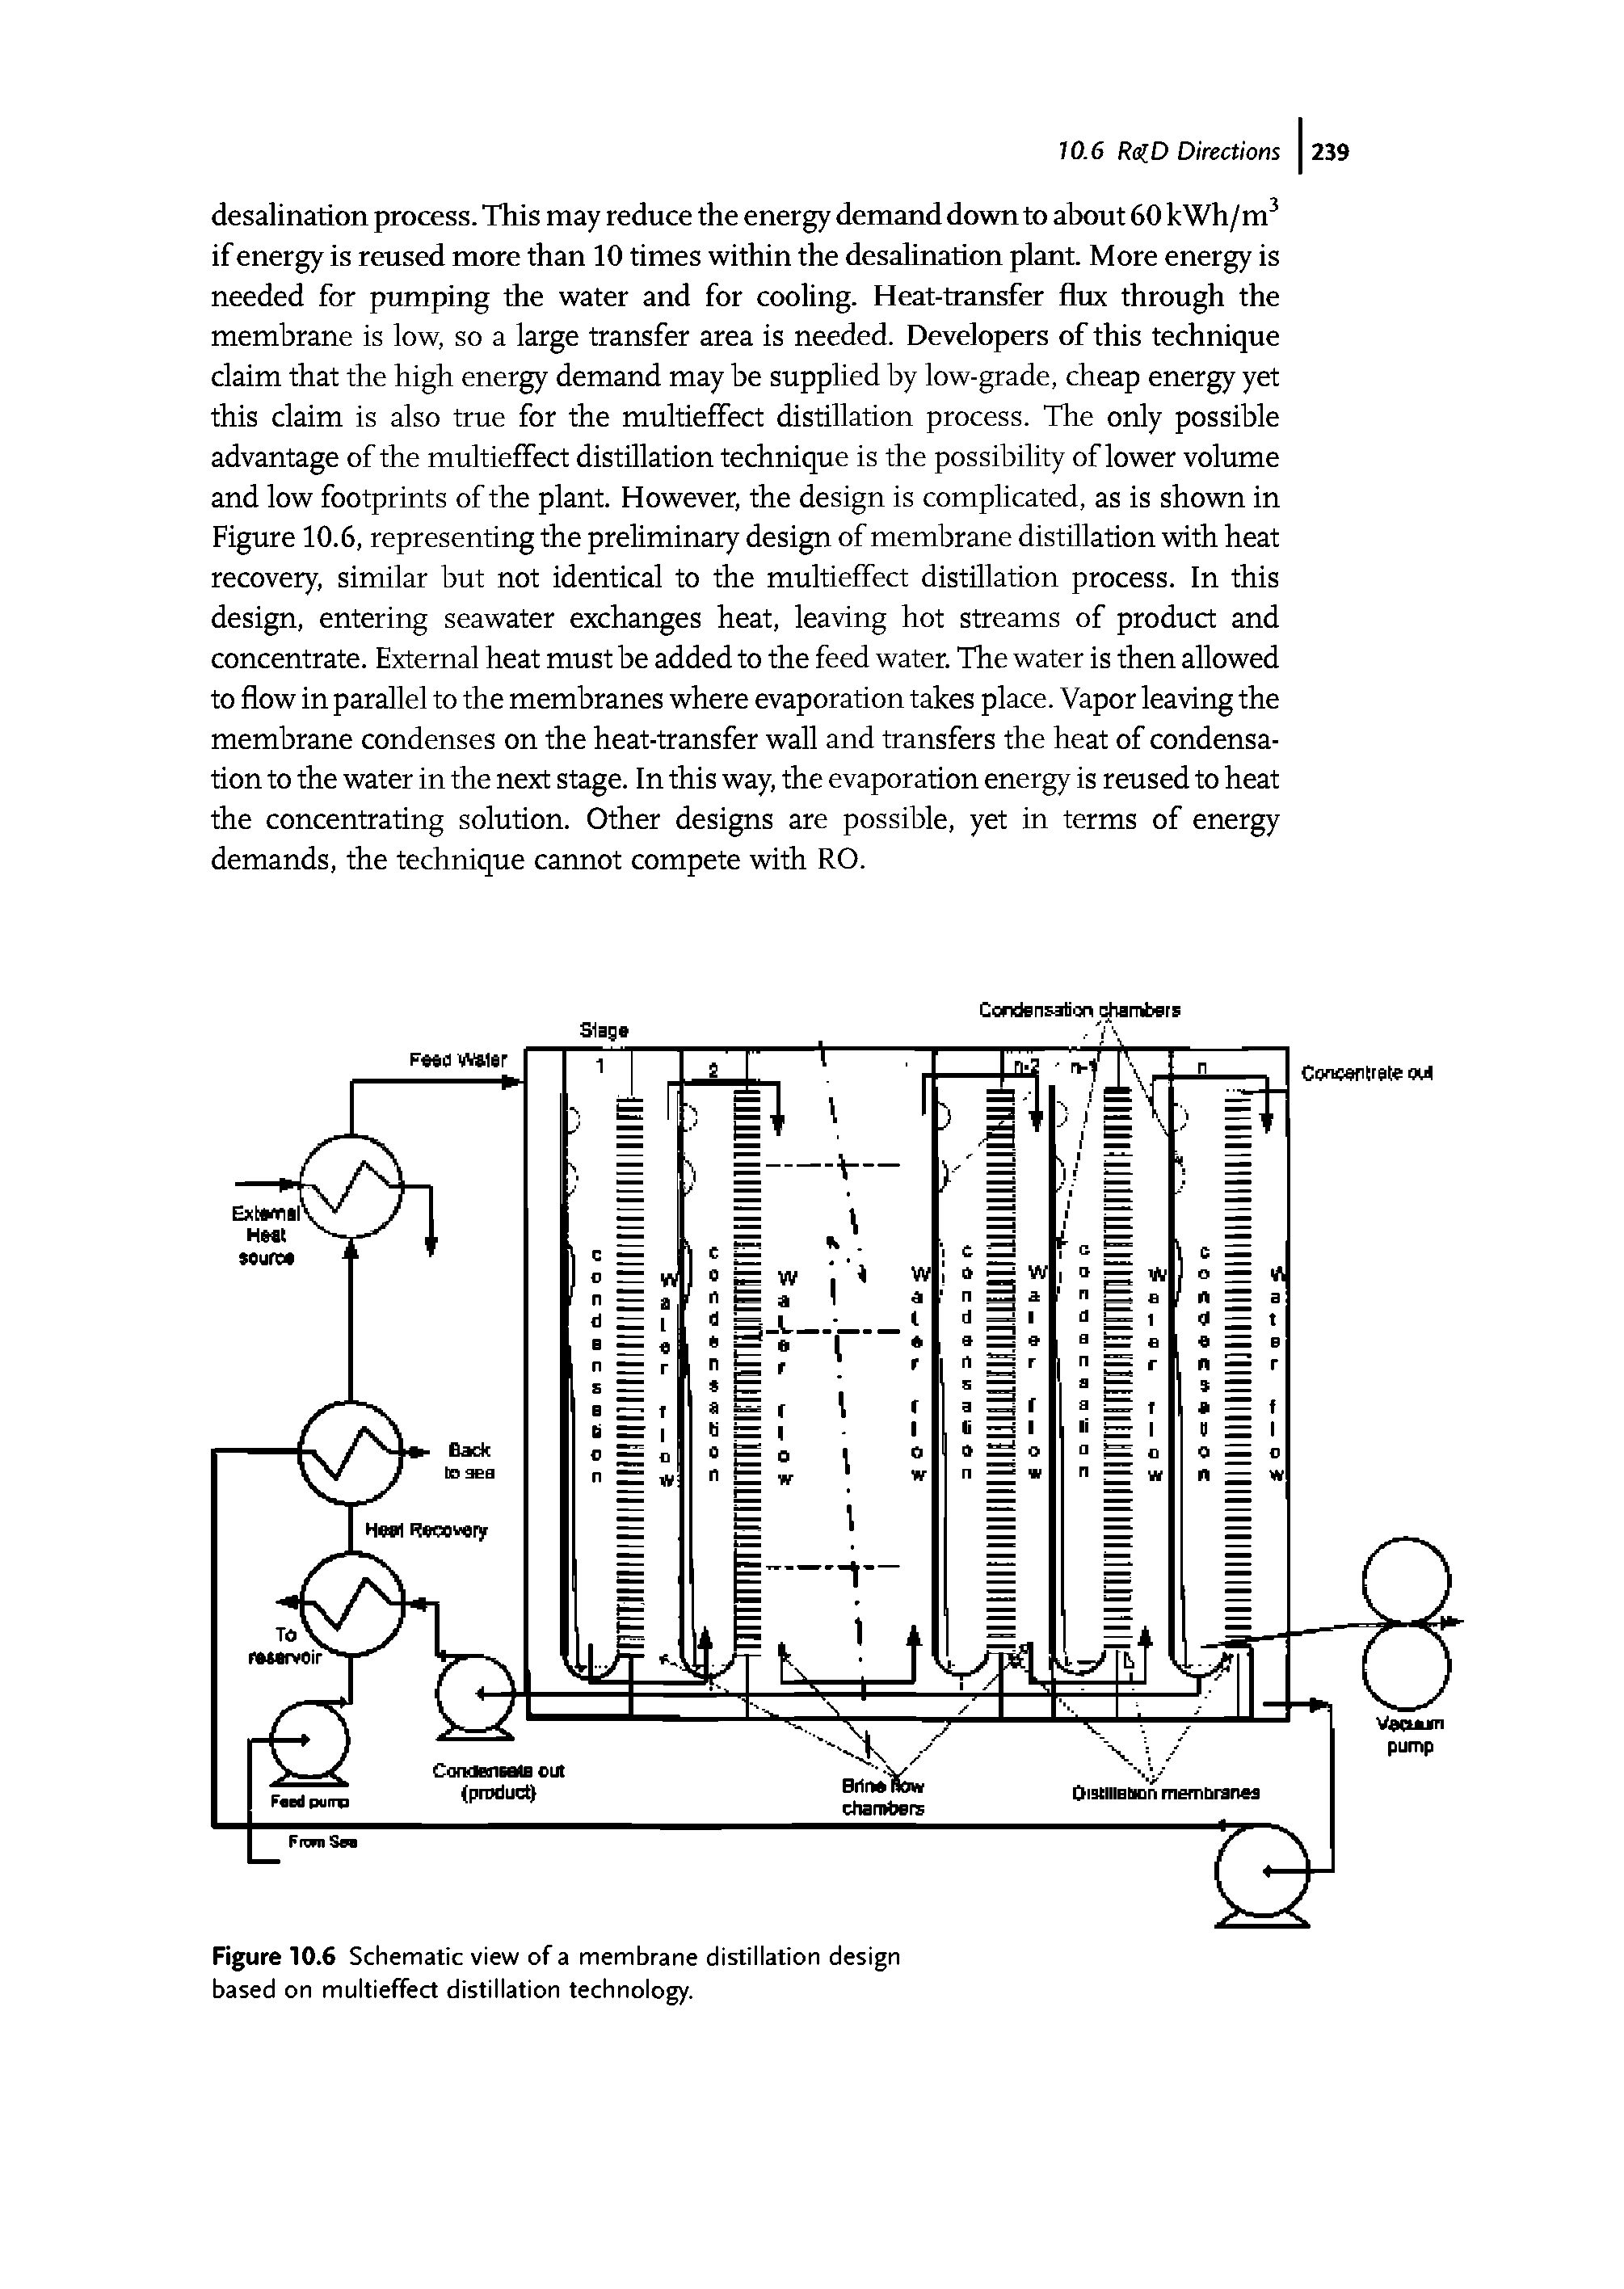 Figure 10.6 Schematic view of a membrane distillation design based on multieffect distillation technology.